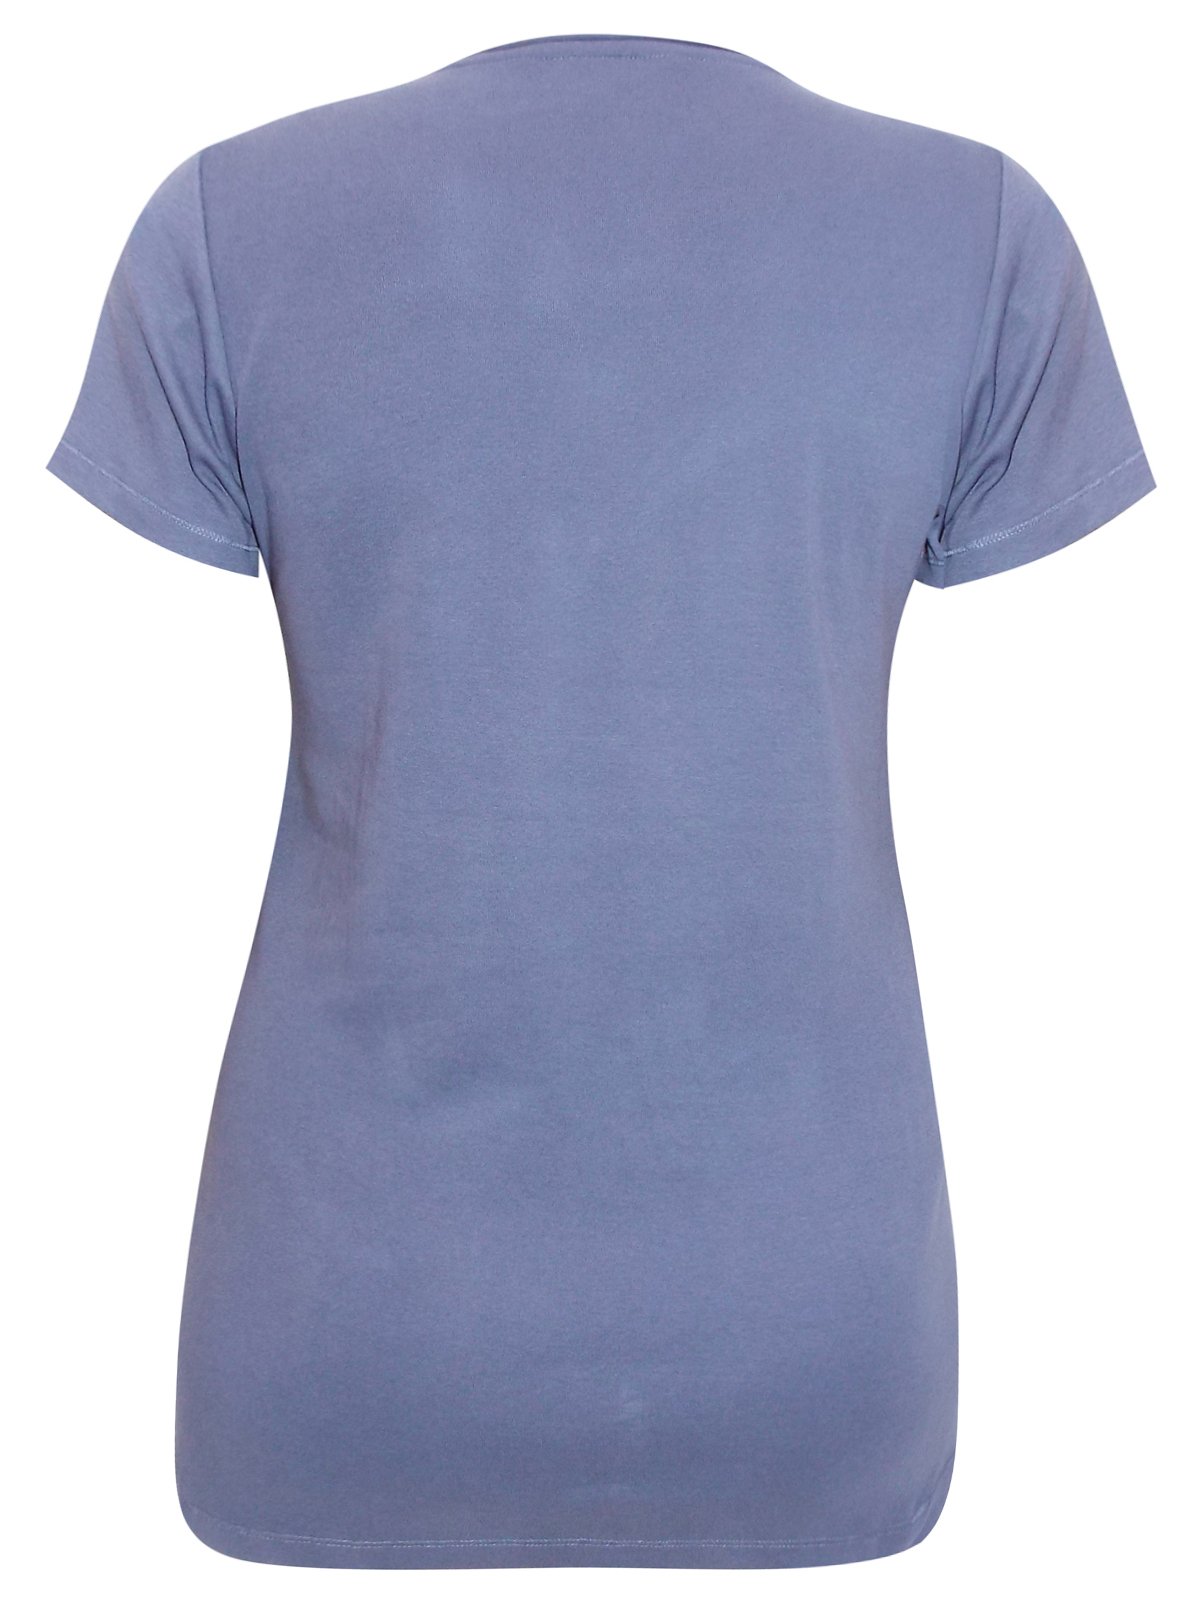 CURVE - - Yours SOFT-PLUM Pure Cotton V-Neck Short Sleeve T-Shirt ...